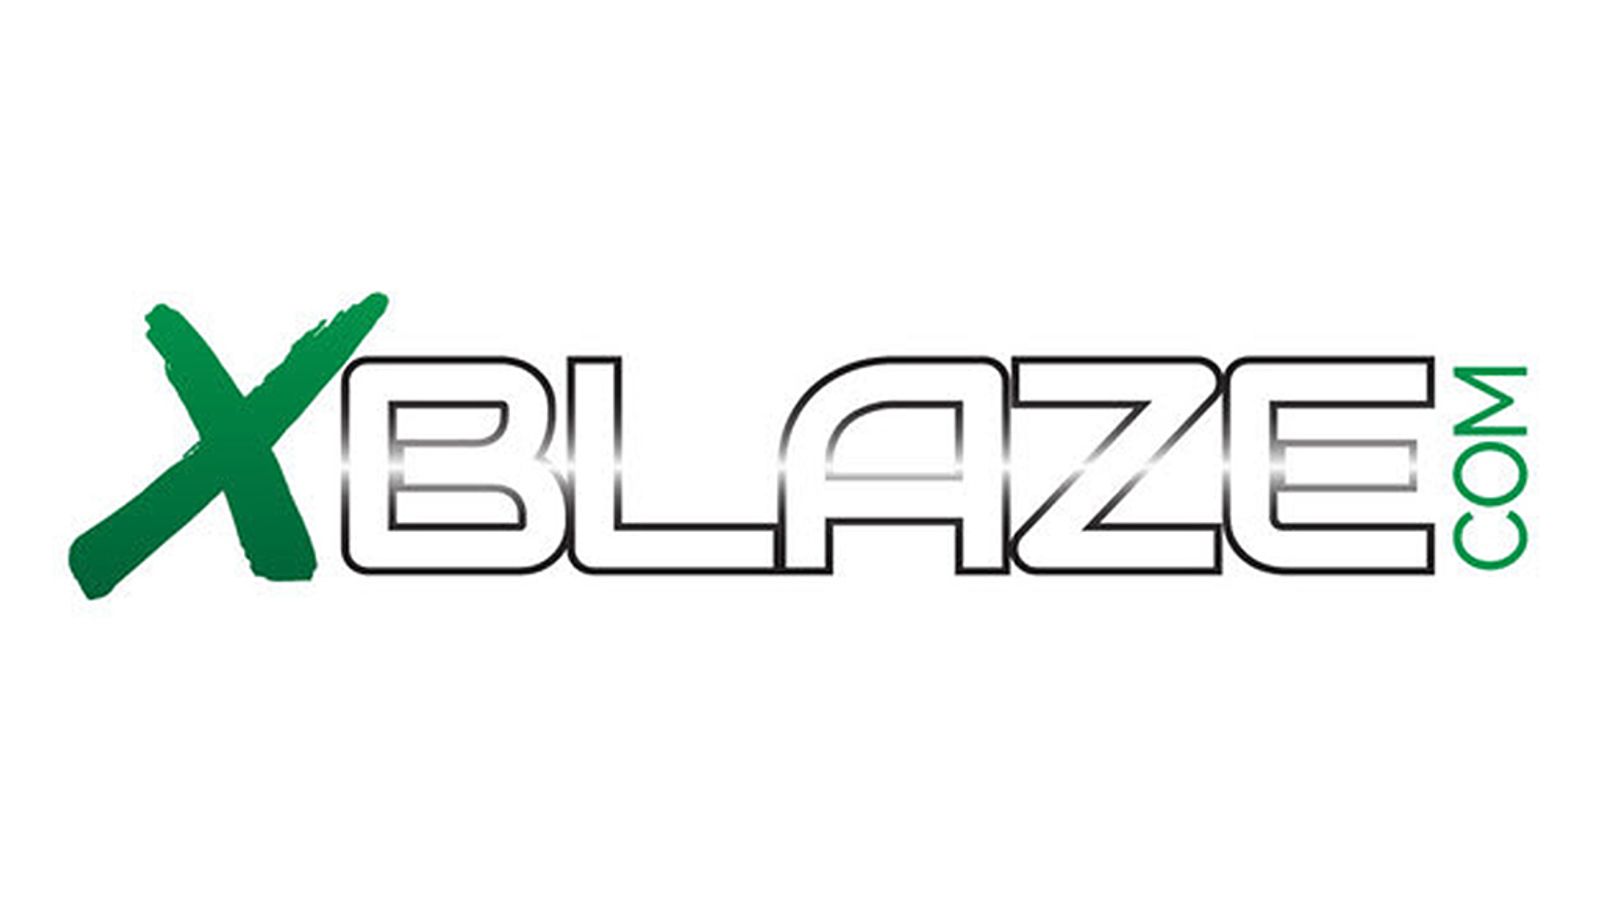 XBlaze Website Now Offers Cash Prizes, Sweepstakes